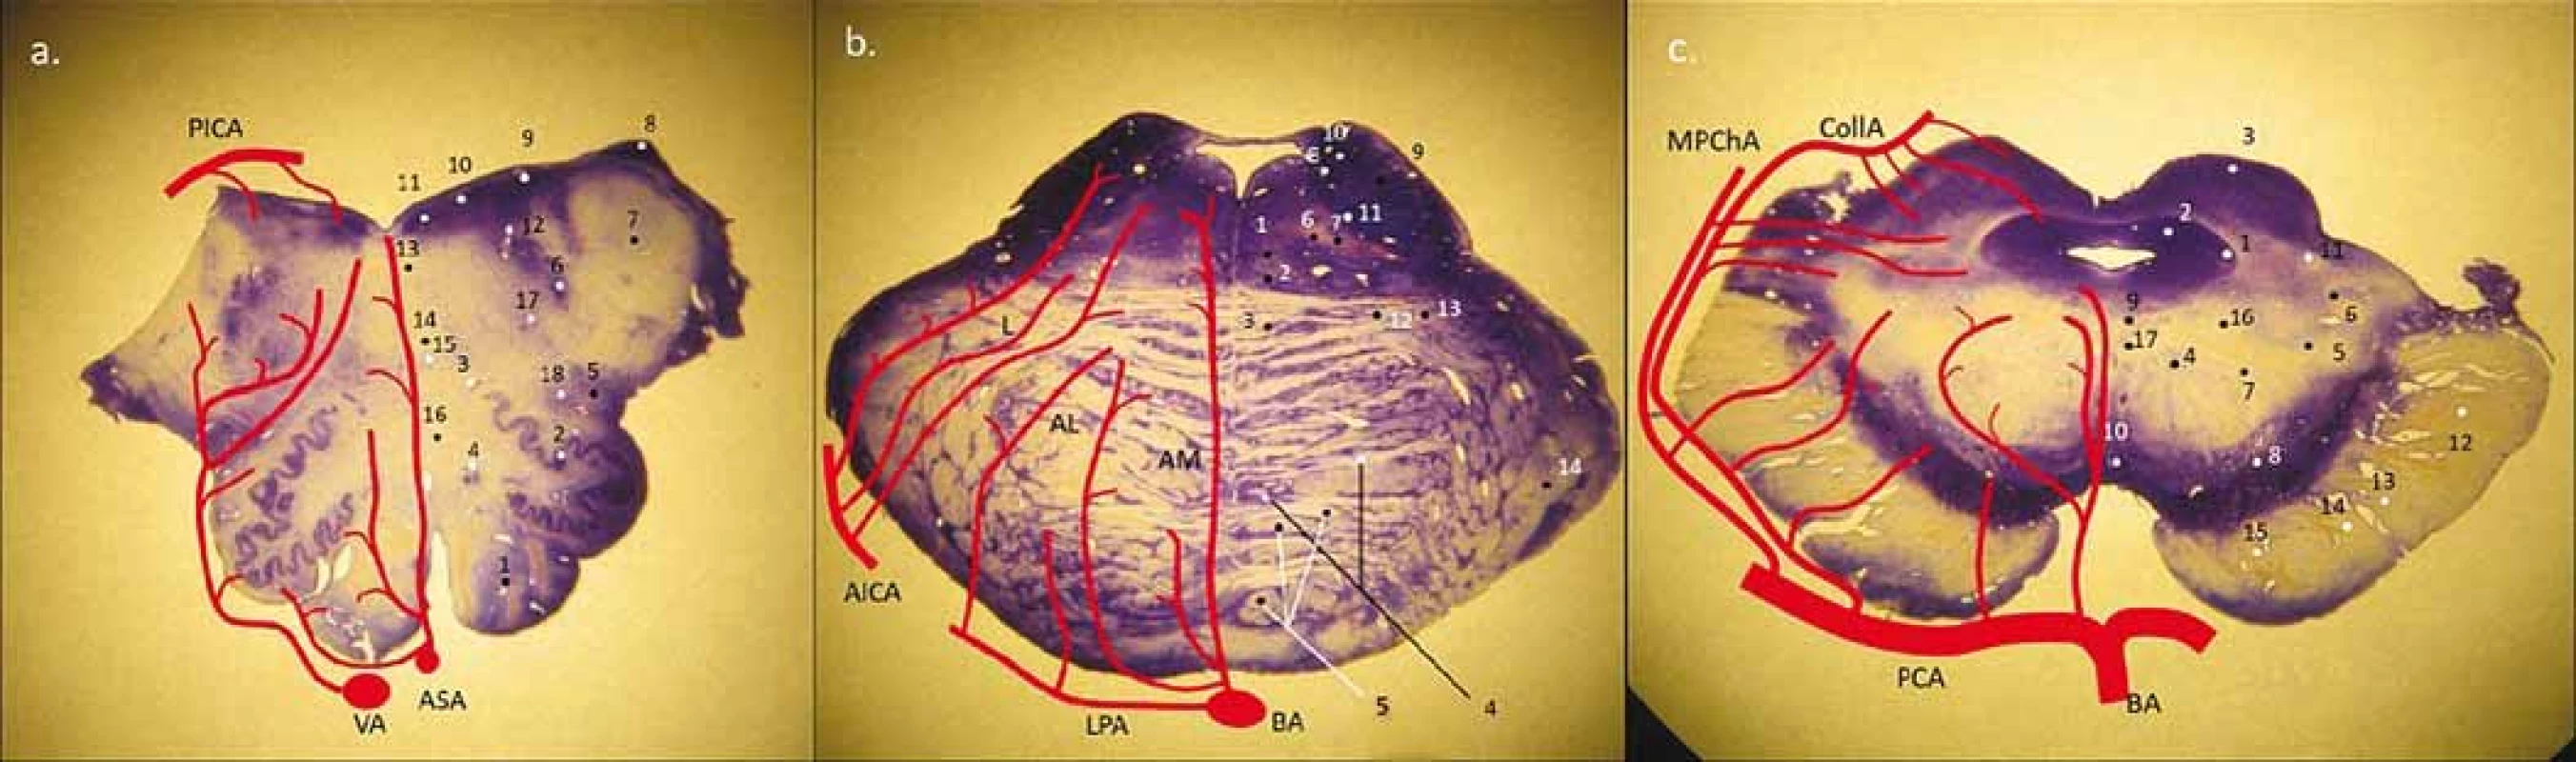 Obecné schéma perforujících arterií na úrovni oblongaty, pontu a mezencefala, tzn. rozdělení na anteromediální,
anterolaterální, laterální skupiny a v oblasti mesencefala a pontu i posteriorní skupinu (z PICA, MPChA, CollA).
(a) medulla oblongata – 1. pyramis medullae oblongatae; 2. ncl. olivaris inferior; 3. ncl. olivaris dosrsalis accessorius; 4. ncl. reticularis lateralis;
5. tr. spino-thalamicus (anterolaterální systém) a spinocerebellaris ant.; 6. ncl. et tr. spinalis nervi trigemini; 7. pedunculus cerebellaris inferior
(corpus restiforme); 8. ncl. cuneatus accessorius; 9. ncl. vestibularis inferior et medialis; 10. ncl. dorsalis n. vagi; 11 ncl. nervi hypoglossi;
12. fasciculus longitudinalis medialis; 13. tr. tecto-spinalis; 14. lemniscus medialis; 15. ncl. ambiguus; 16 tr. et ncl. solitarius
(b) pons – 1. fasciculus longitudinalis medialis; 2. tr. tecto-spinalis a tr. reticulo-spinalis; 3. lemniscus medialis; 4. ncl. pontis; 5. tr. corticospinalis
(roztříštěné svazky pyramid); 6. tr. centralis tegmenti; 7. tr. rubrospinalis; 8. ncl. vestibularis superior; 9. pedunculus cerebellaris superior
(brachium conjunctivum); 10. tr. et ncl. mesencephalicus CN V.; 11. ncl. motorius et pontinus CN V.; 12. tr. spino-thalamicus (anterolaterální
systém); 13. tr. spinocerebellaris anterior; 14. peduncullus cerebellaris medius (brachium pontis)
(c) mezencefalon – 1. ncl. mesencephalicus CN V.; 2. substantia grisea centralis; 3. colliculus superior; 4. ncl. ruber; 5. lemniscus medialis;
6. tr. spino-thalamicus (anterolaterální systém); 7. tr. cerebellothalamicus; 8. susbstnatia nigra (reticularis et compacta); 9. pedunculus (crus
cerebri); 10. ncl. nervi oculomotorii (CN III.); 11. ncl. interpeduncularis; 12. ncl. spinotectalis; 13. tr. occipito-, temporo-, parieto-pontinnus;
14. tr. corticospinalis; 15. tr. corticonuclearis; 16. tr. fronto-pontinnus; 17. tr. centralis tegmenti; 18. fasciculus longitudinalis medialis
AICA – arteria cerebelli inferior anterior; AL – anterolaterální skupina; AM – anteromediální skupina; ASA – arteria spinalis anterior; BA –
arteria basiliaris; CN – hlavový nerv; CollA – arteria collicularis; L – laterální skupina; LPA – laterální pontinní arterie; MPChA – arteria choroidea
posterior medialis; PCA – arteria cerebri posterior; PICA – arteria cerebelli inferior posterior; VA – arteria vertebralis<br>
Fig. 1. General scheme of perforators in the medulla oblongata, pons and mesencephalon with division into the anteromedial,
anterolateral, lateral group and in the area of mesecephalon and pons and also in the posterior group (from PICA, MPChA, CollA).
(a) medulla oblongata – 1. pyramis medullae oblongatae; 2. ncl. olivaris inferior; 3. ncl. olivaris dorsalis accessorius; 4. ncl. reticularis lateralis;
5. tr. spino-thalamicus (anterolateral system) et spinocerebellaris ant.; 6. ncl. et tr. spinalis nervi trigemini; 7. pedunculus cerebellaris inferior
(corpus restiforme); 8. ncl. cuneatus accessorius; 9. ncl. vestibularis inferior et medialis; 10. ncl. dorsalis n. vagi; 11. ncl. nervi hypoglossi;
12. fasciculus longitudinalis medialis; 13. tr. tecto-spinalis; 14. lemniscus medialis; 15. ncl. ambiguus; 16. tr. et ncl. solitarius
(b) pons – 1. fasciculus longitudinalis medialis; 2. tr. tecto-spinalis et tr. reticulo-spinalis; 3. lemniscus medialis; 4. ncl. pontis; 5. tr. corticospinalis
(crashed pyramidal columns); 6. tr. centralis tegmenti; 7. tr. rubrospinalis; 8. ncl. vestibularis superior; 9. pedunculus cerebellaris superior
(brachium conjunctivum); 10. tr. et ncl. mesencephalicus CN V.; 11. ncl. motorius et pontinus CN V.; 12. tr. spino-thalamicus (anterolateral
system); 13. tr. spinocerebellaris anterior; 14. peduncullus cerebellaris medius (brachium pontis)
(c) mesencephalon – 1. ncl. mesencephalicus CN V.; 2. substantia grisea centralis; 3. colliculus superior; 4. ncl. ruber; 5. lemniscus medialis;
6. tr. spino-thalamicus (anterolateral system); 7. tr. cerebellothalamicus; 8. substantia nigra (reticularis et compacta); 9. pedunculus (crus
cerebri); 10. ncl. nervi oculomotorii (CN III.); 11. ncl. interpeduncularis; 12. ncl. spinotectalis; 13. tr. occipito-, temporo-, parieto-pontinnus;
14. tr. corticospinalis; 15. tr. corticonuclearis; 16. tr. fronto-pontinnus; 17. tr. centralis tegmenti; 18. fasciculus longitudinalis medialis
AICA – anterior inferior cerebellar artery; AL – anterolateral group; AM – anteromedial group; ASA – arteria spinalis anterior; BA – basilar artery;
CN – cranial nerve; CollA – collicular artery; L – laterar group; LPA – lateral pontine artery; MPChA – medial posterior choroidal artery;
PCA – posterior cerebral artery; PICA – posterior inferior cerebellar artery; VA – vertebral artery